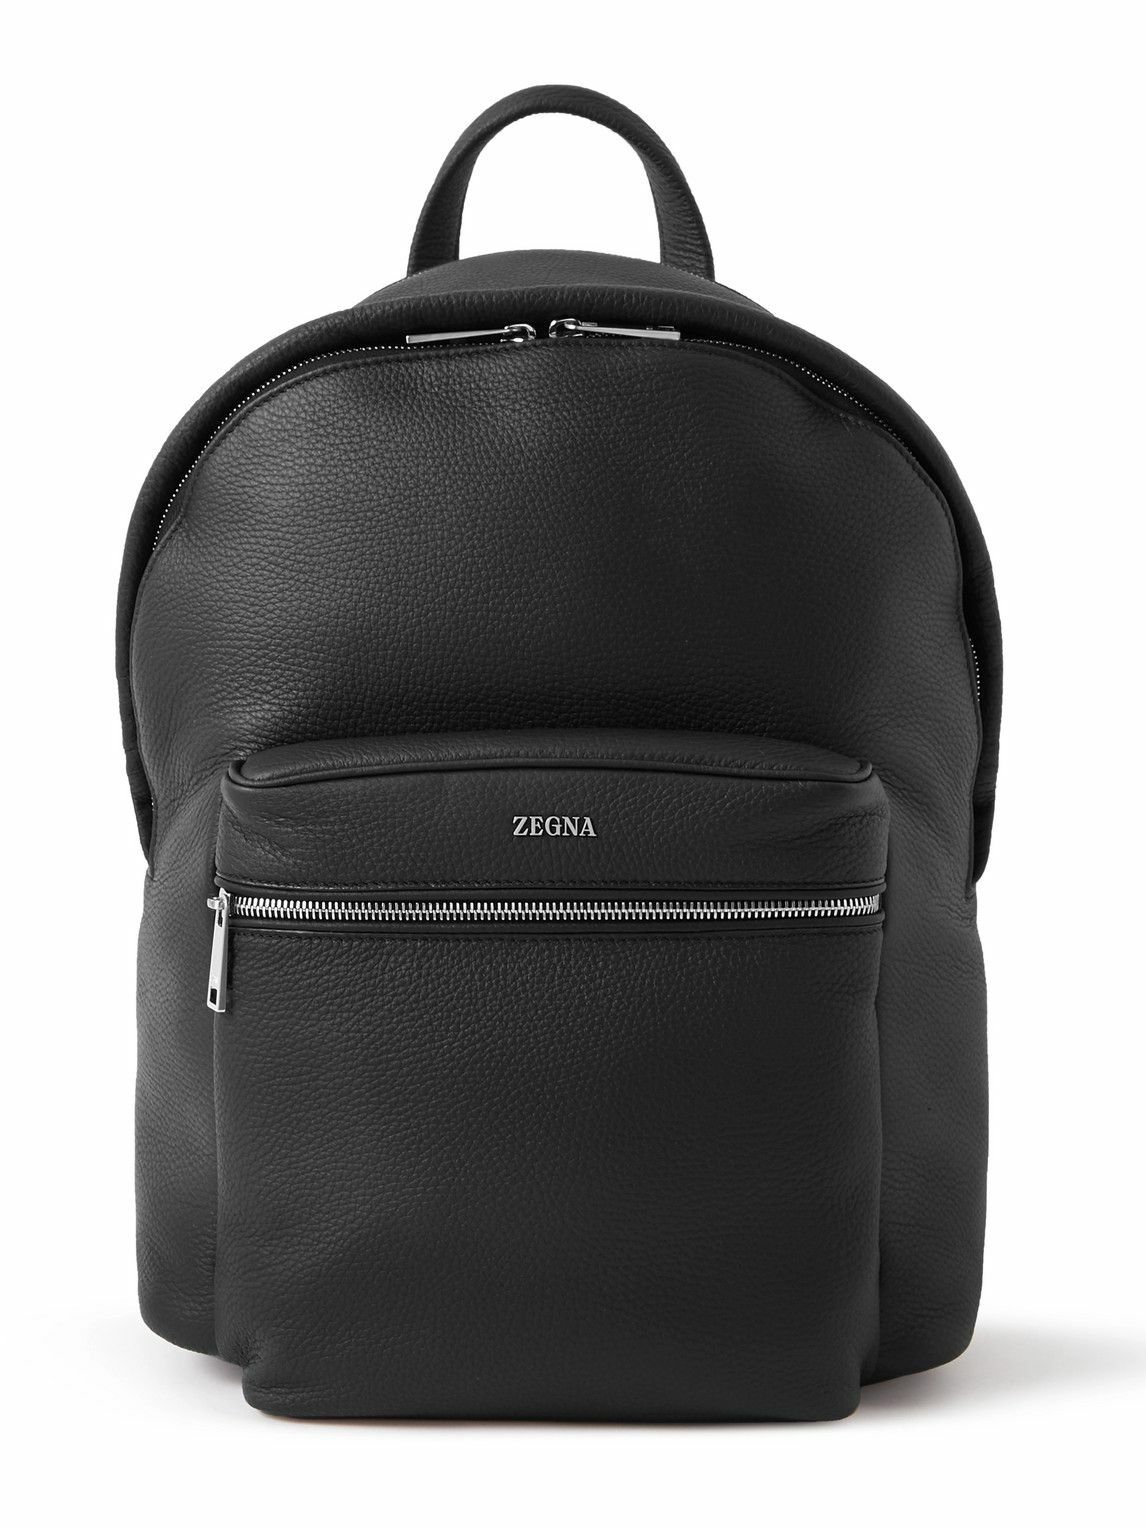 Zegna - Logo-Appliquéd Full-Grain Leather Backpack Zegna